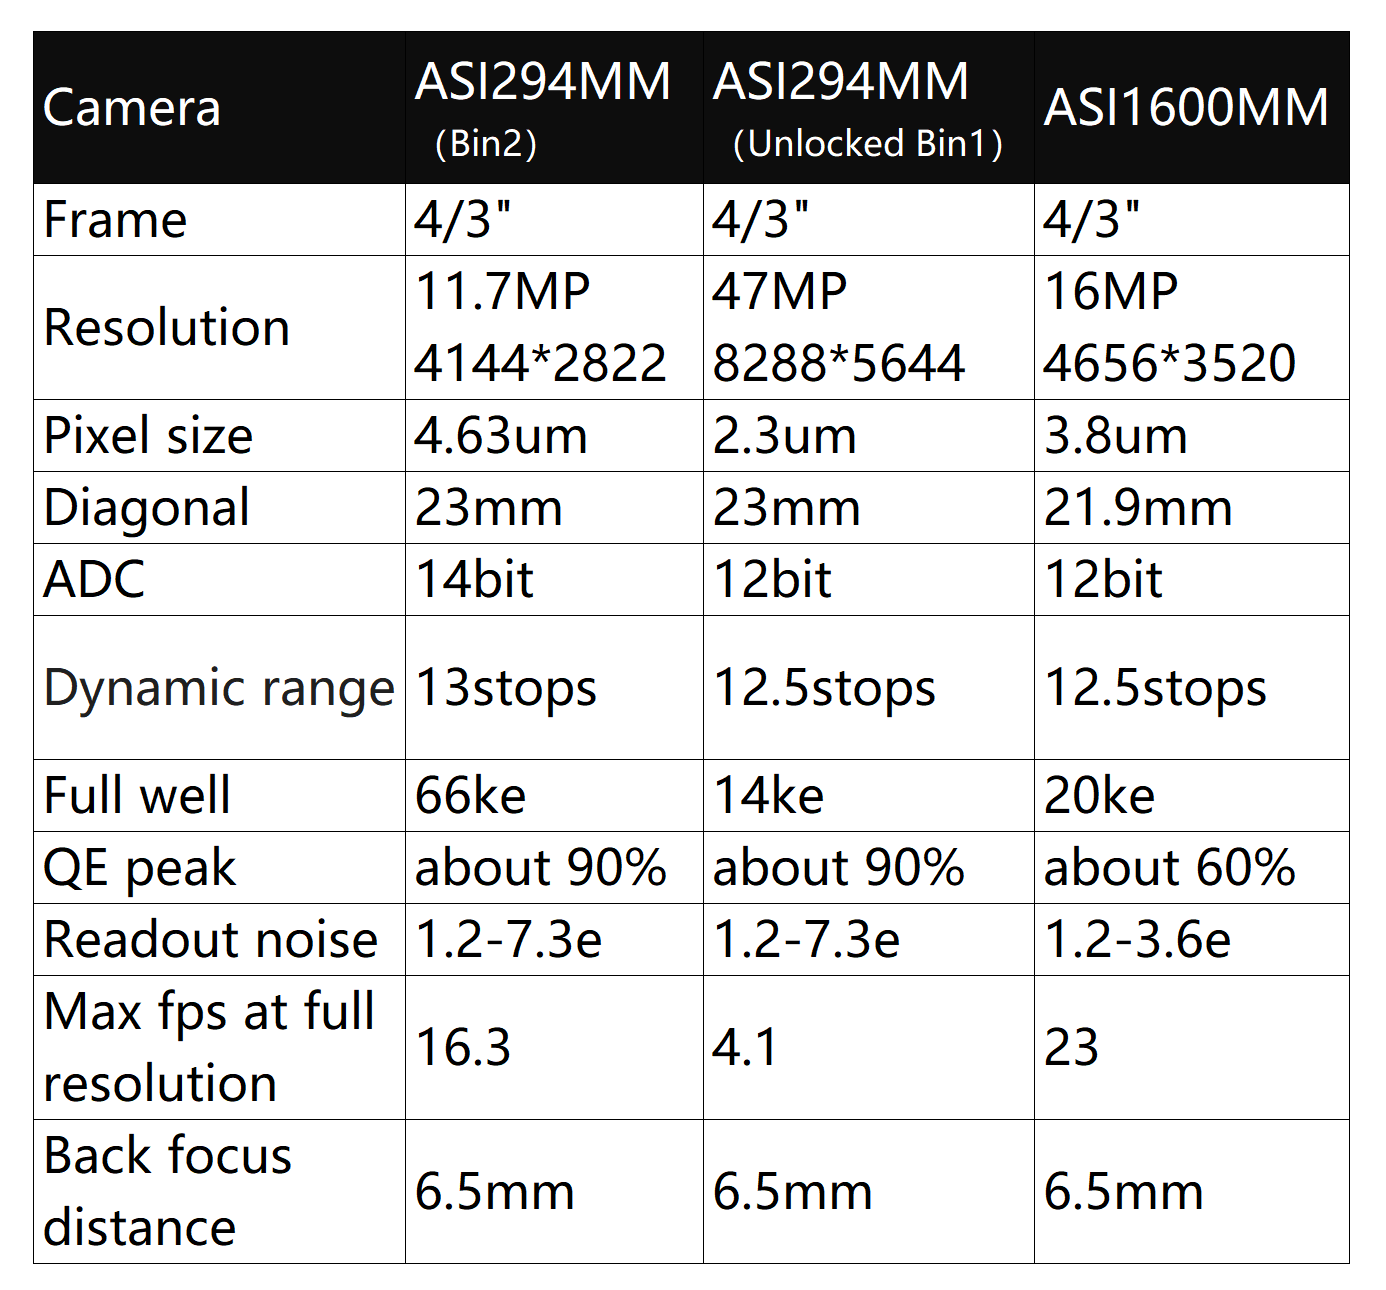   ZWO Mono CMOS Camera  ASI294MM  - Sensore IMX492  